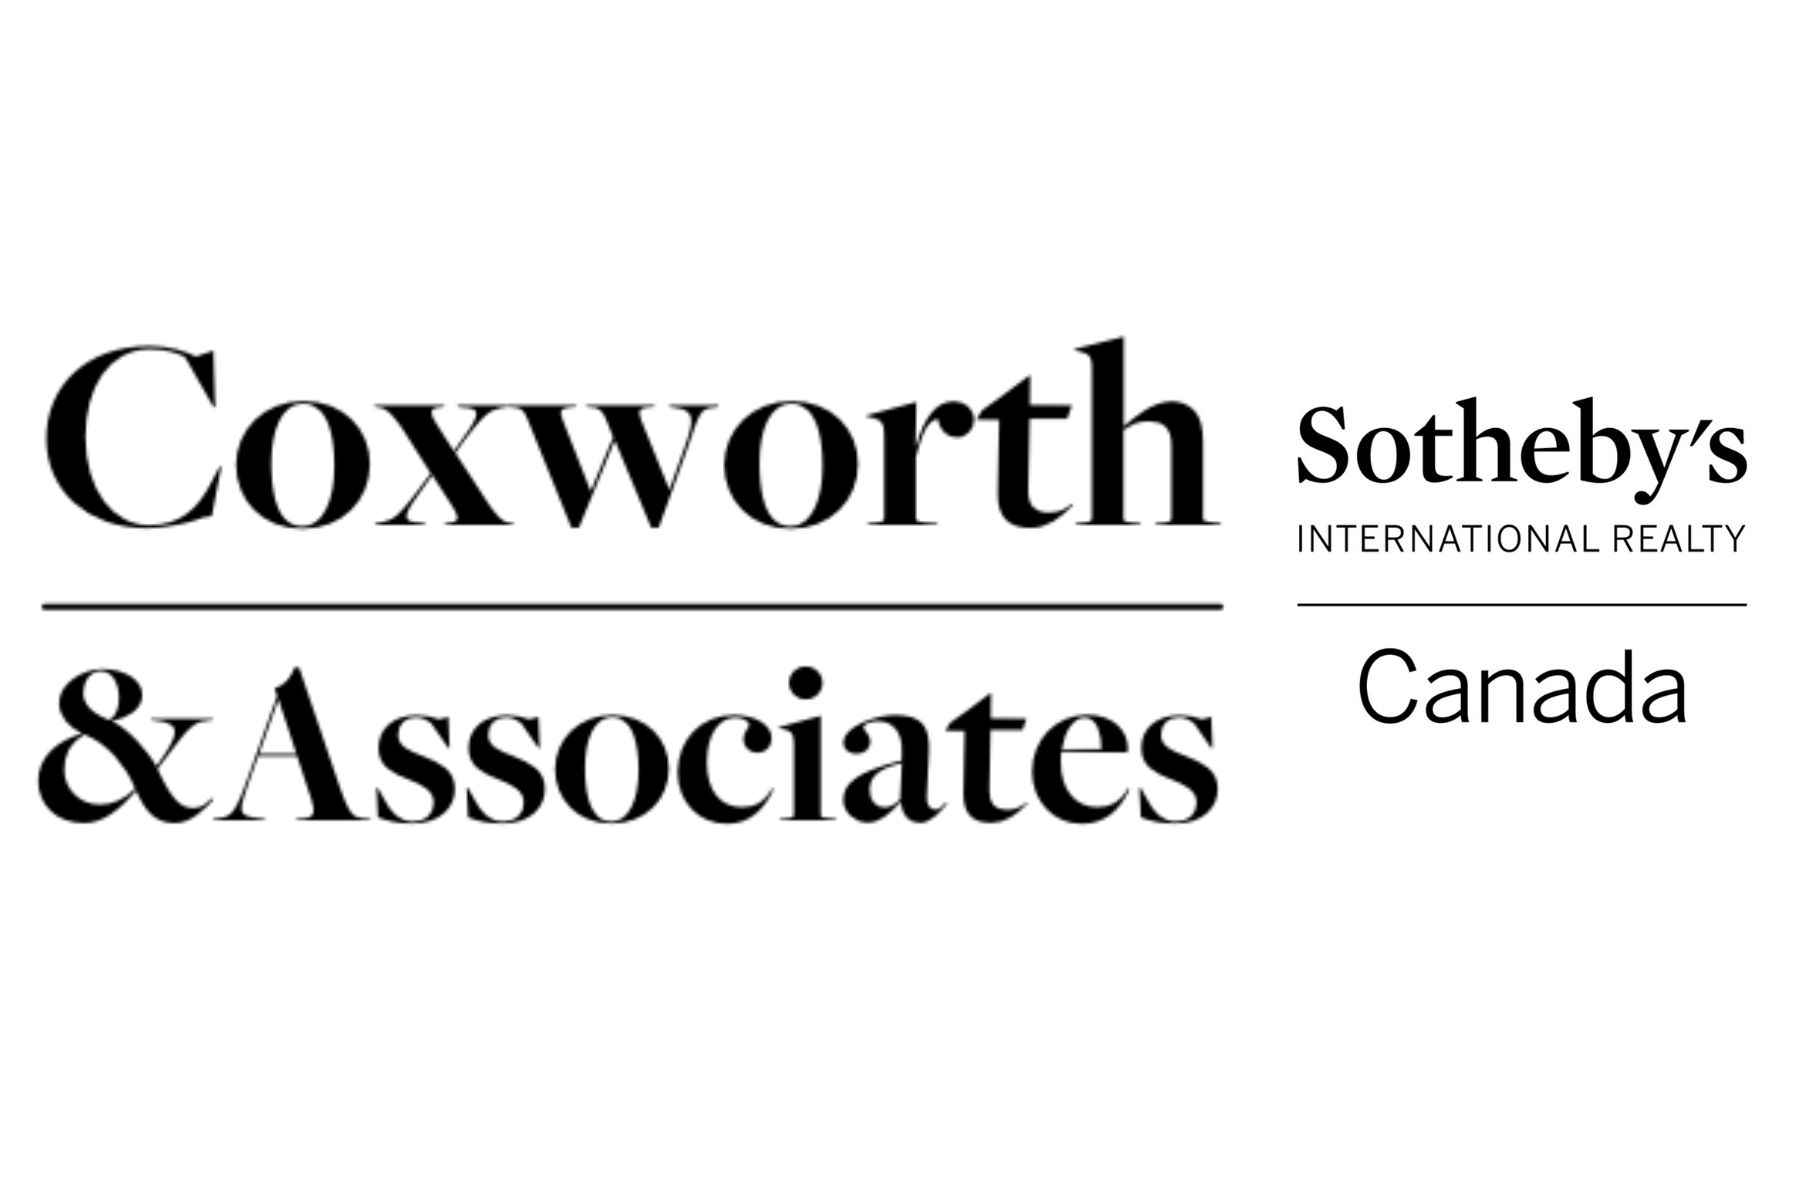 Coxworth & Associates Sotheby's International Realty Canada logo